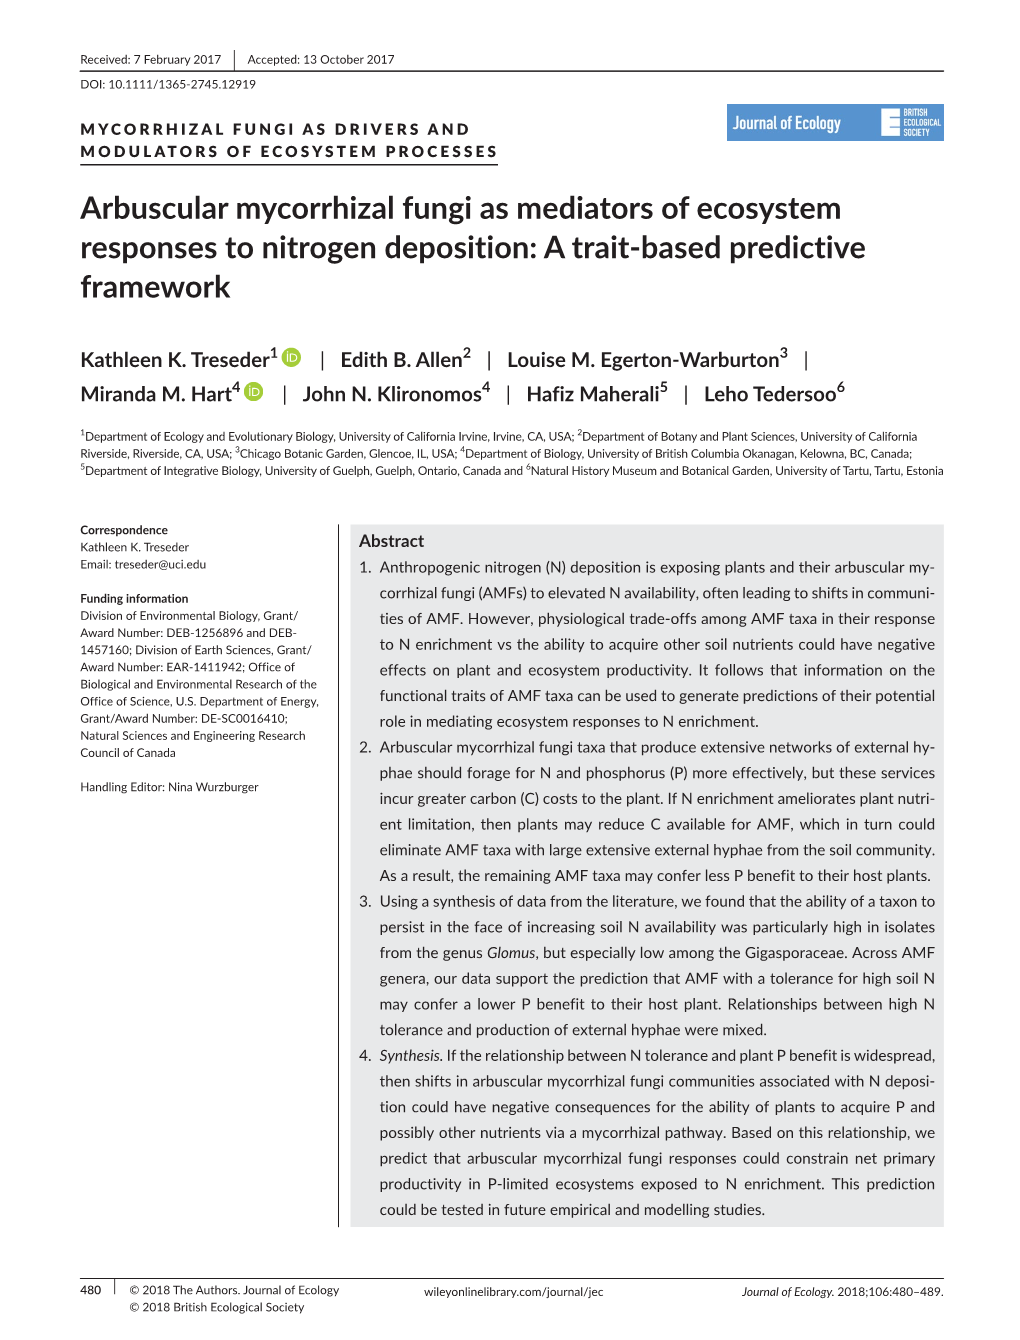 Arbuscular Mycorrhizal Fungi As Mediators of Ecosystem Responses to Nitrogen Deposition: a Trait-­Based Predictive Framework